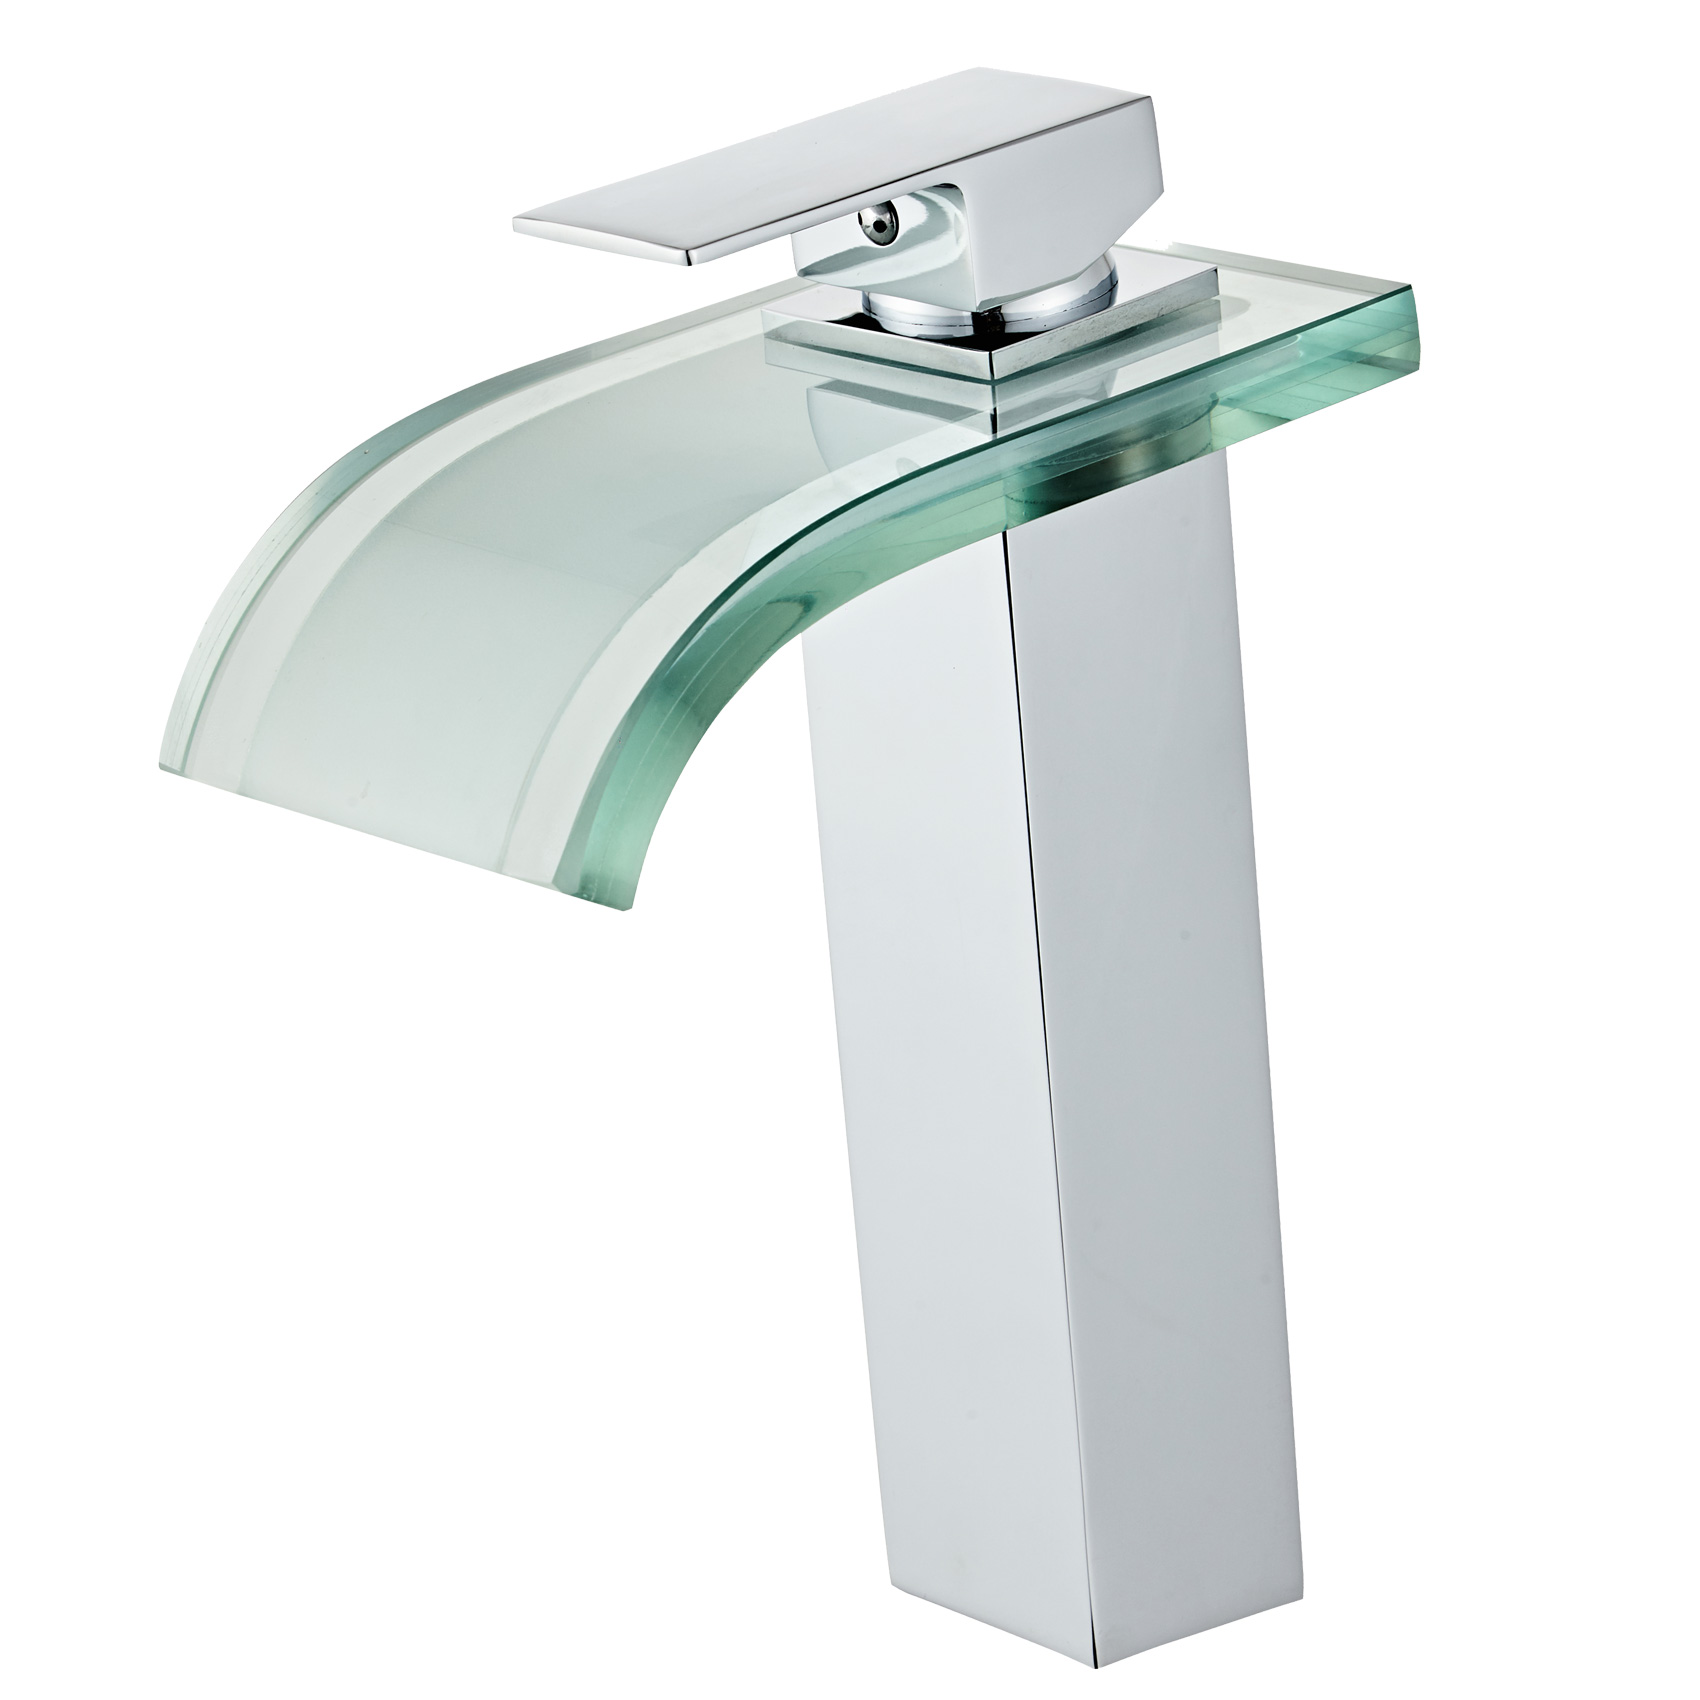 Wovier Waterfall Vessel Faucet, Single Handle Single Hole glass Bathroom Faucet - w8108-7